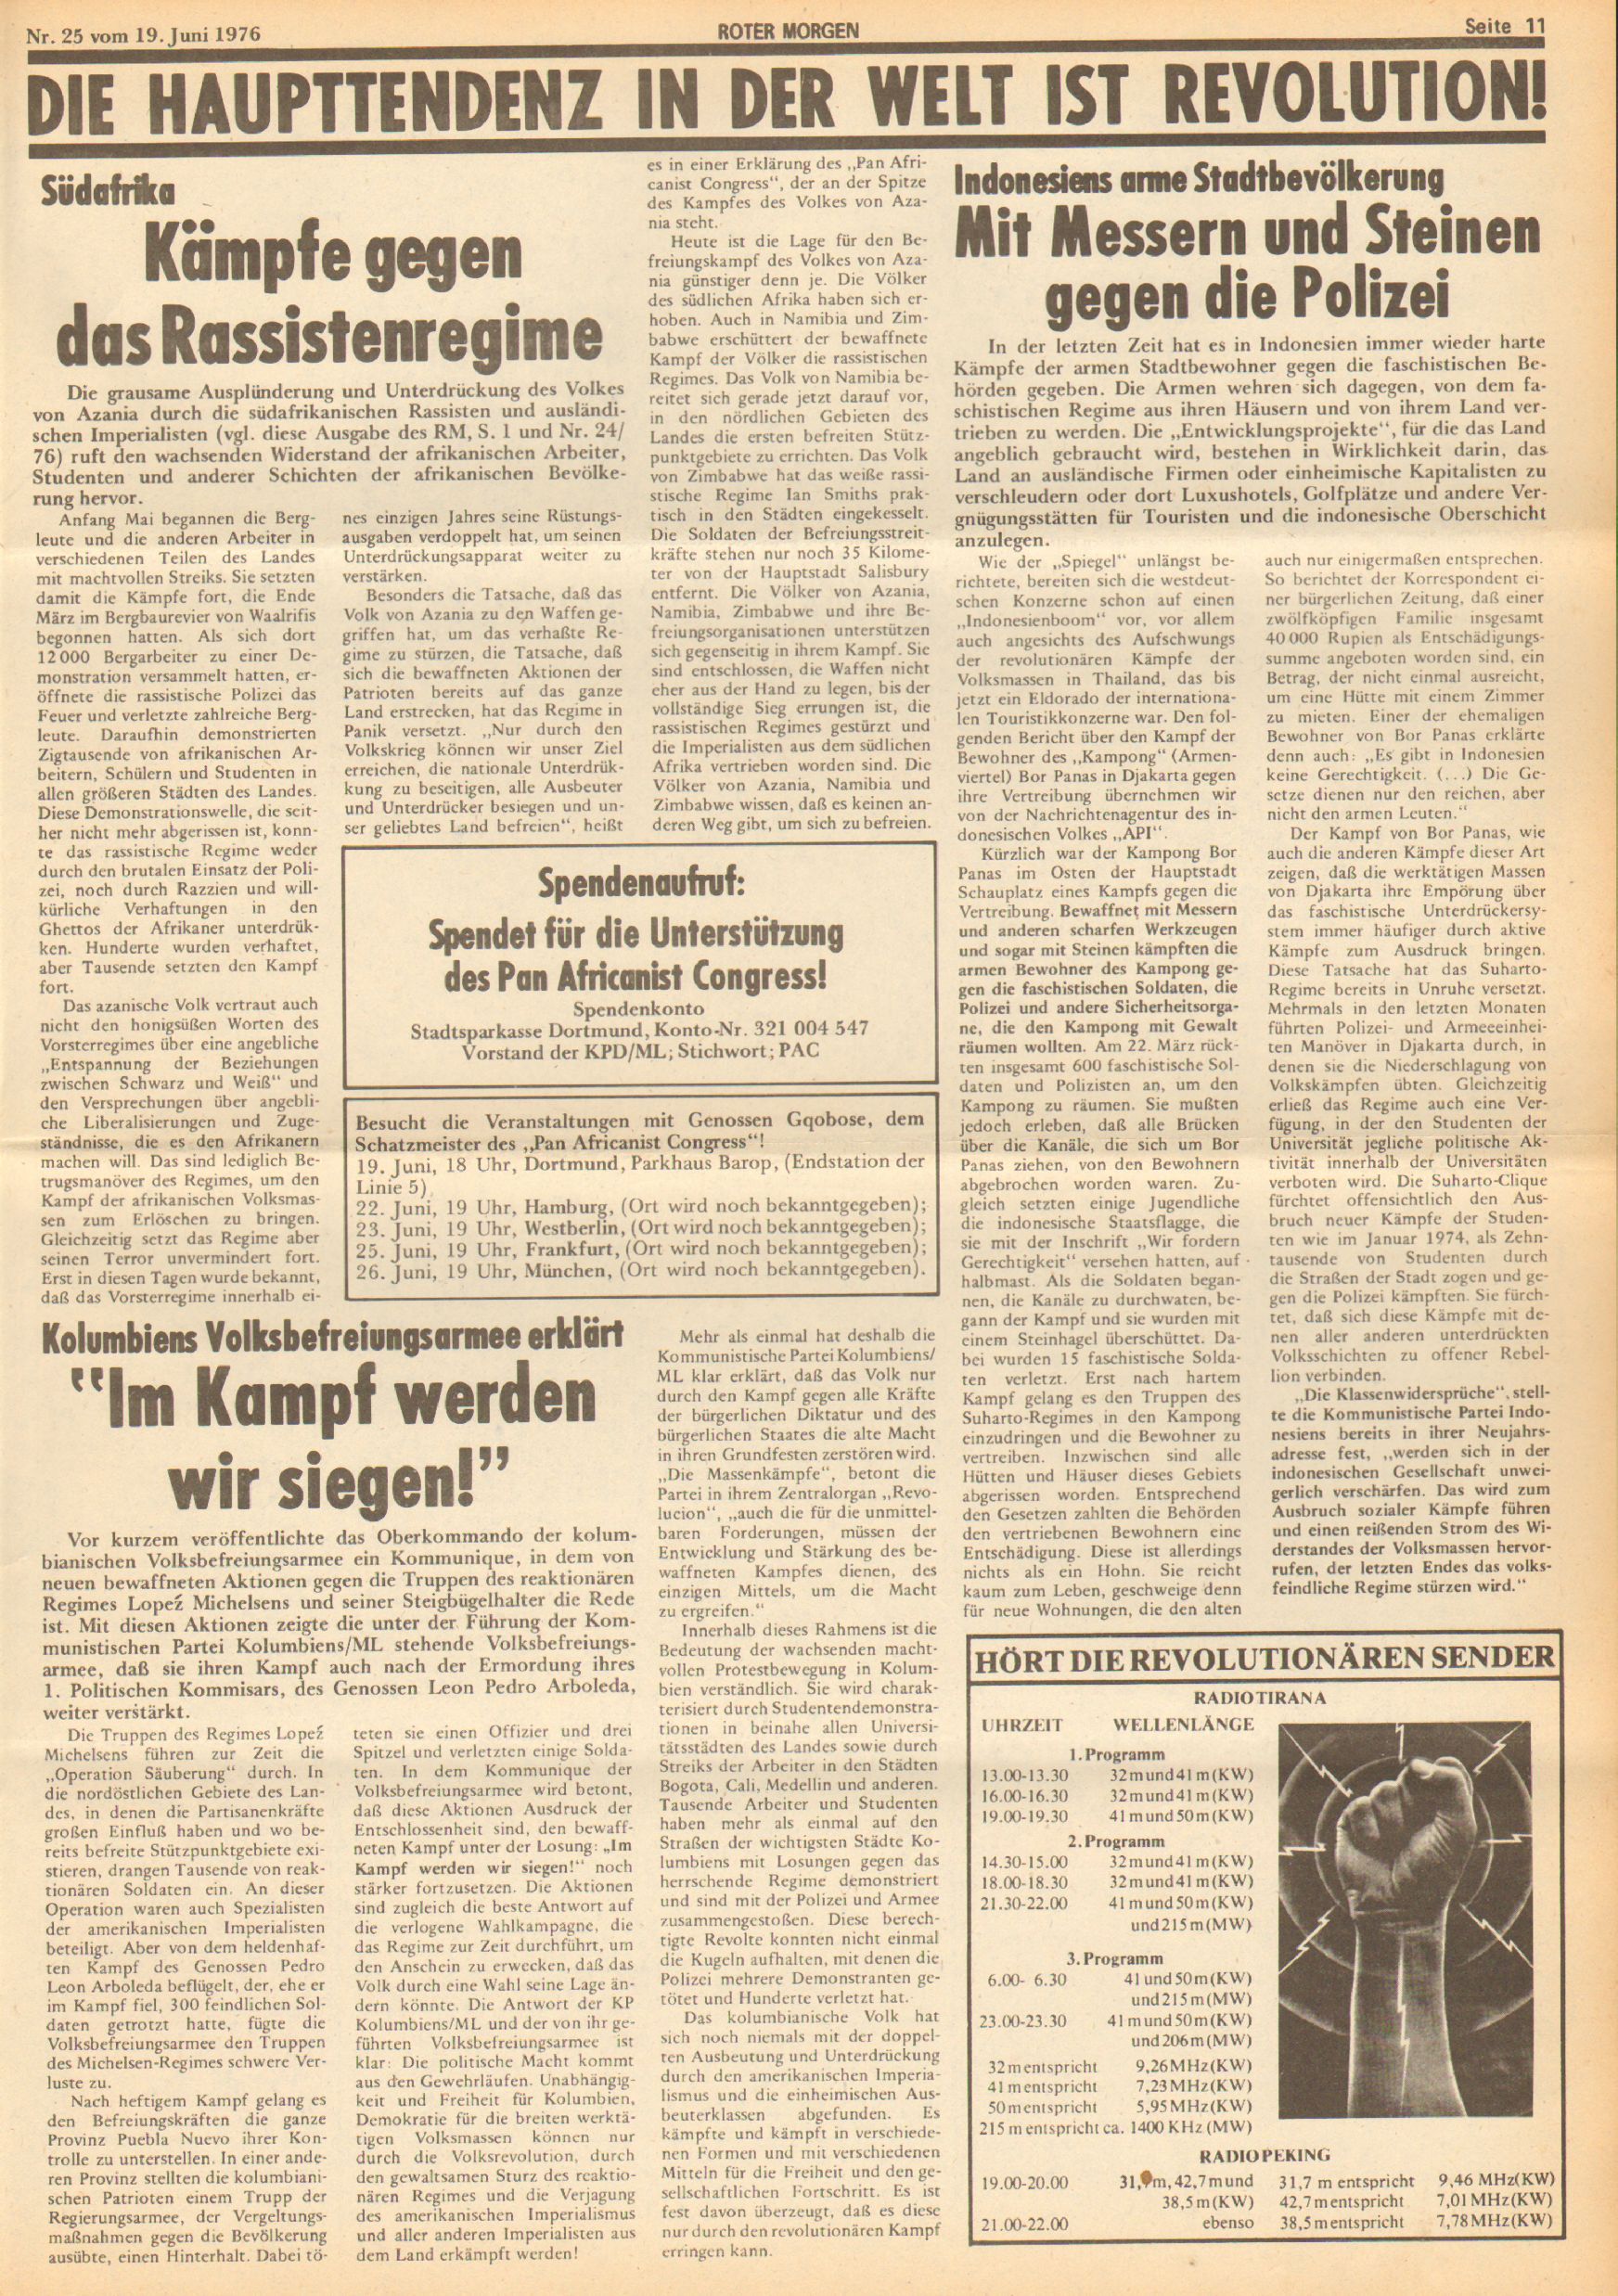 Roter Morgen, 10. Jg., 19. Juni 1976, Nr. 25, Seite 11